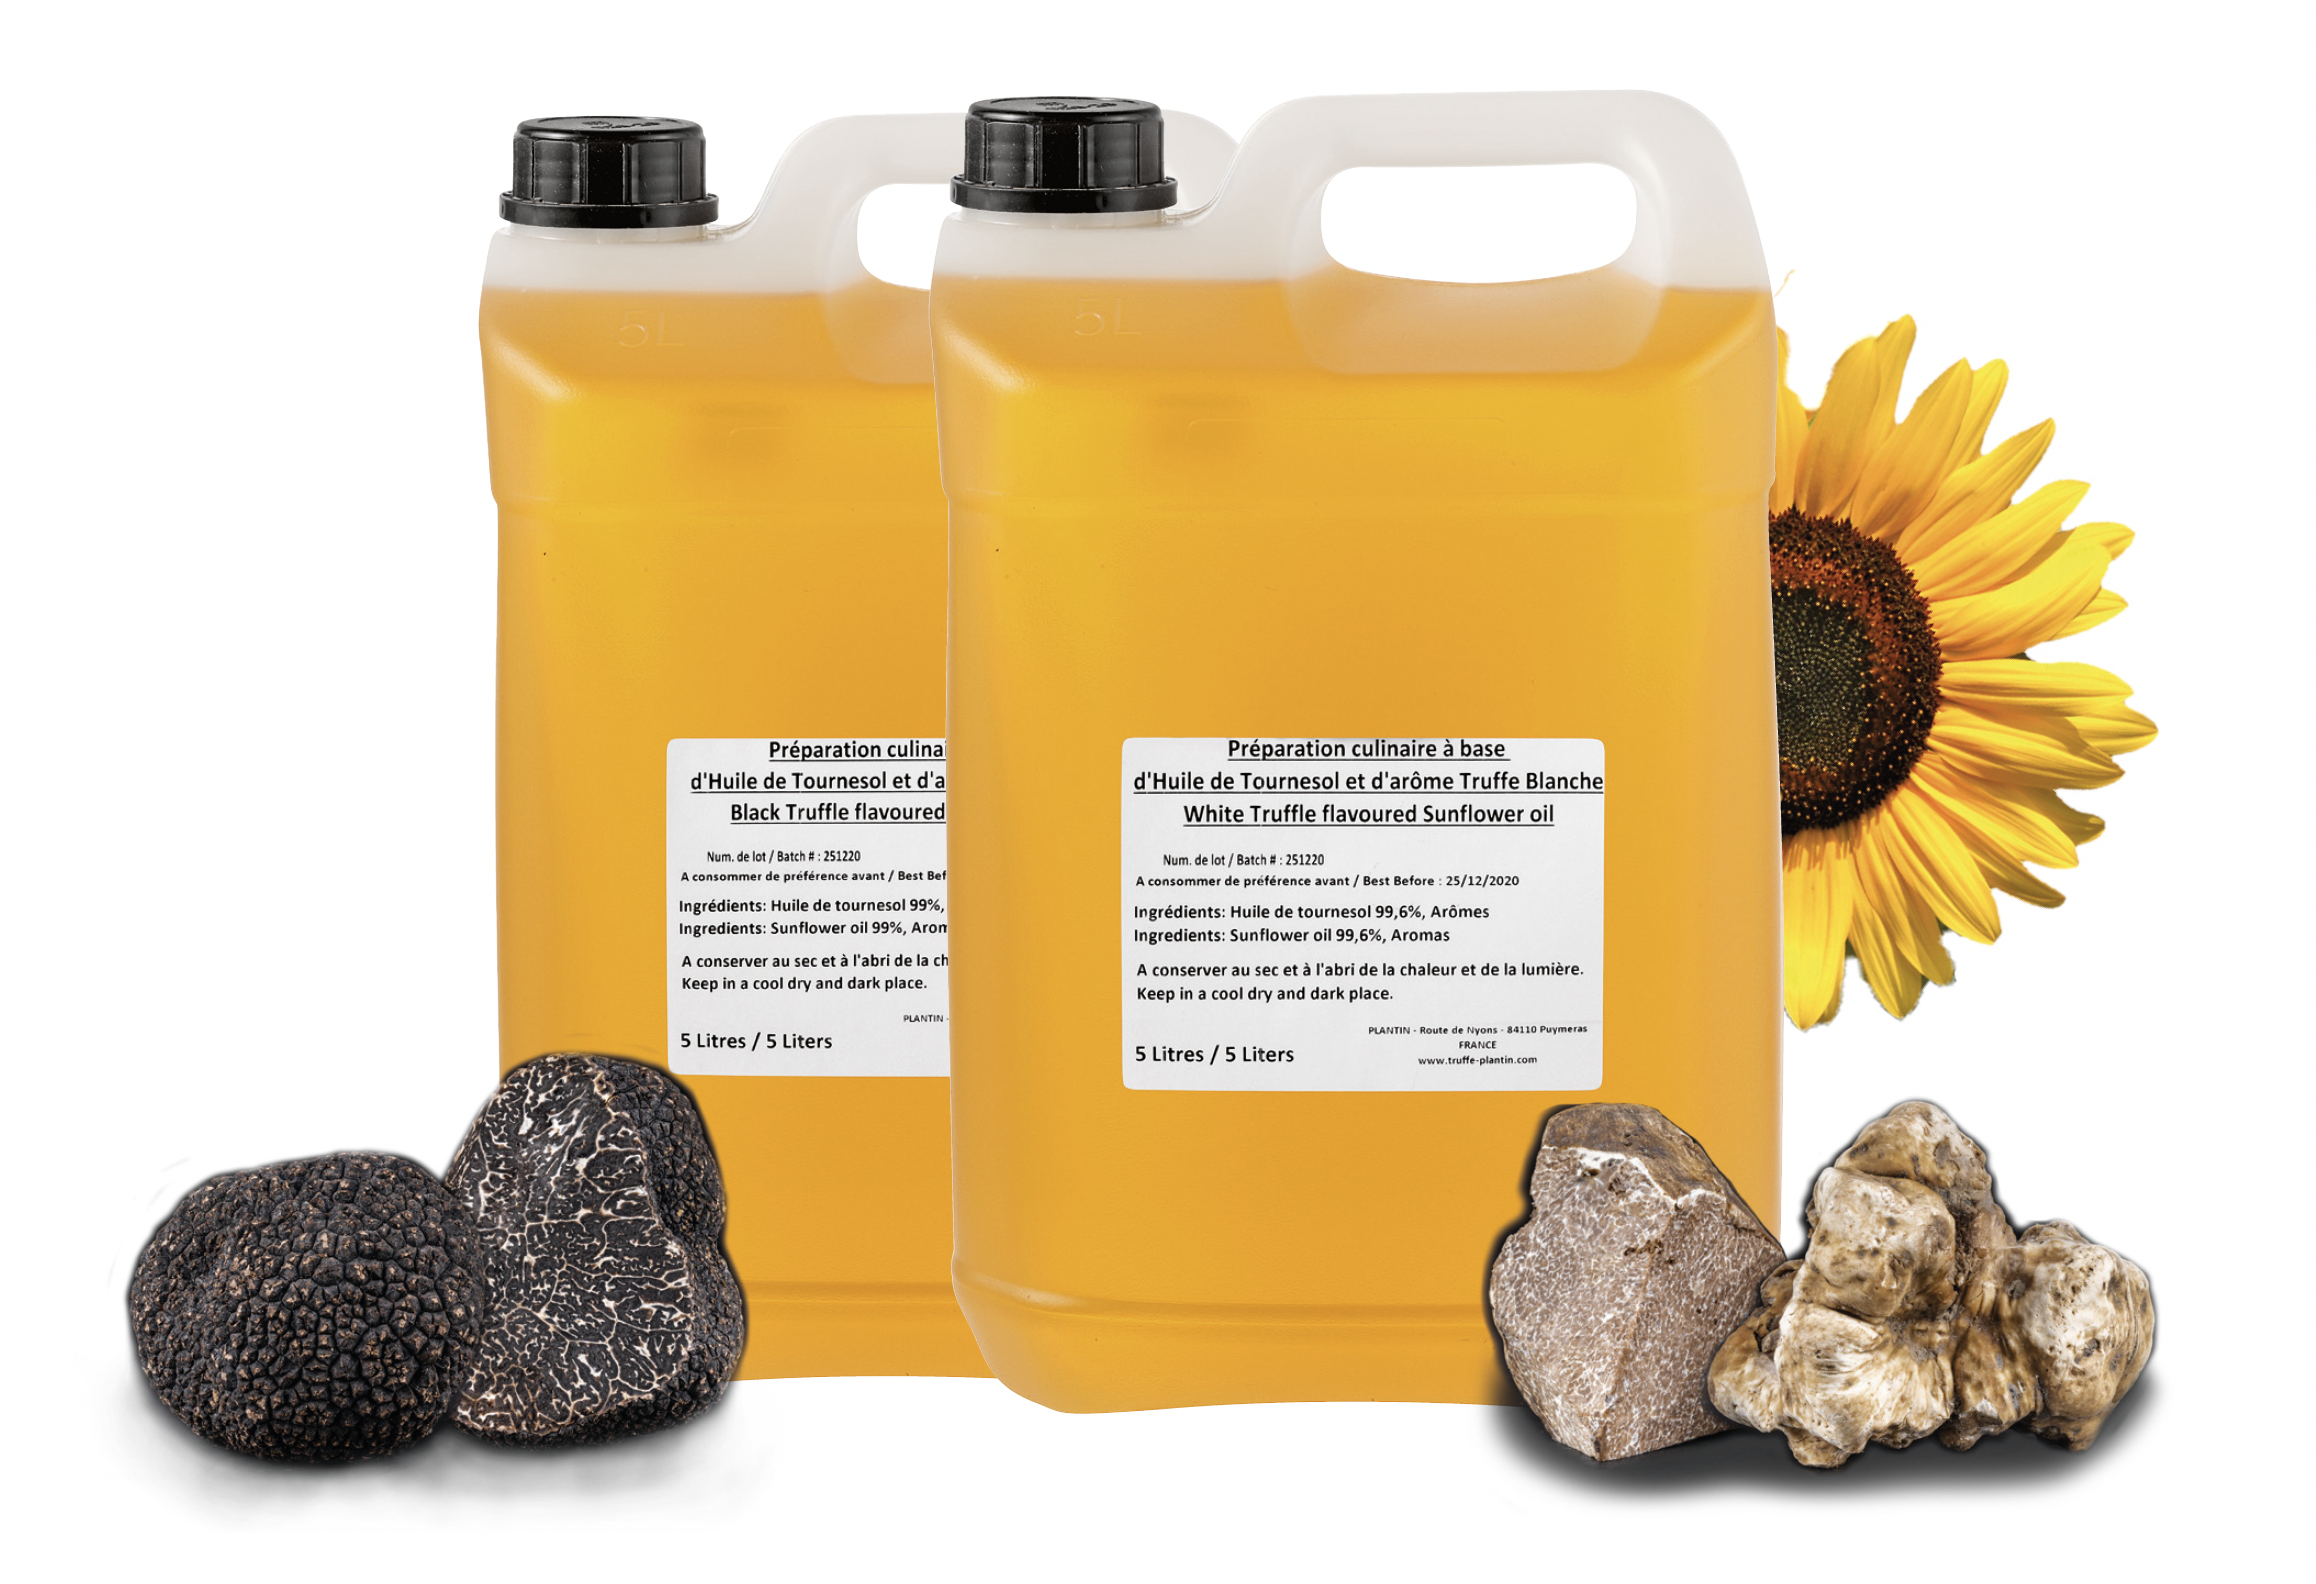 Black or white truffle-flavoured sunflower oils